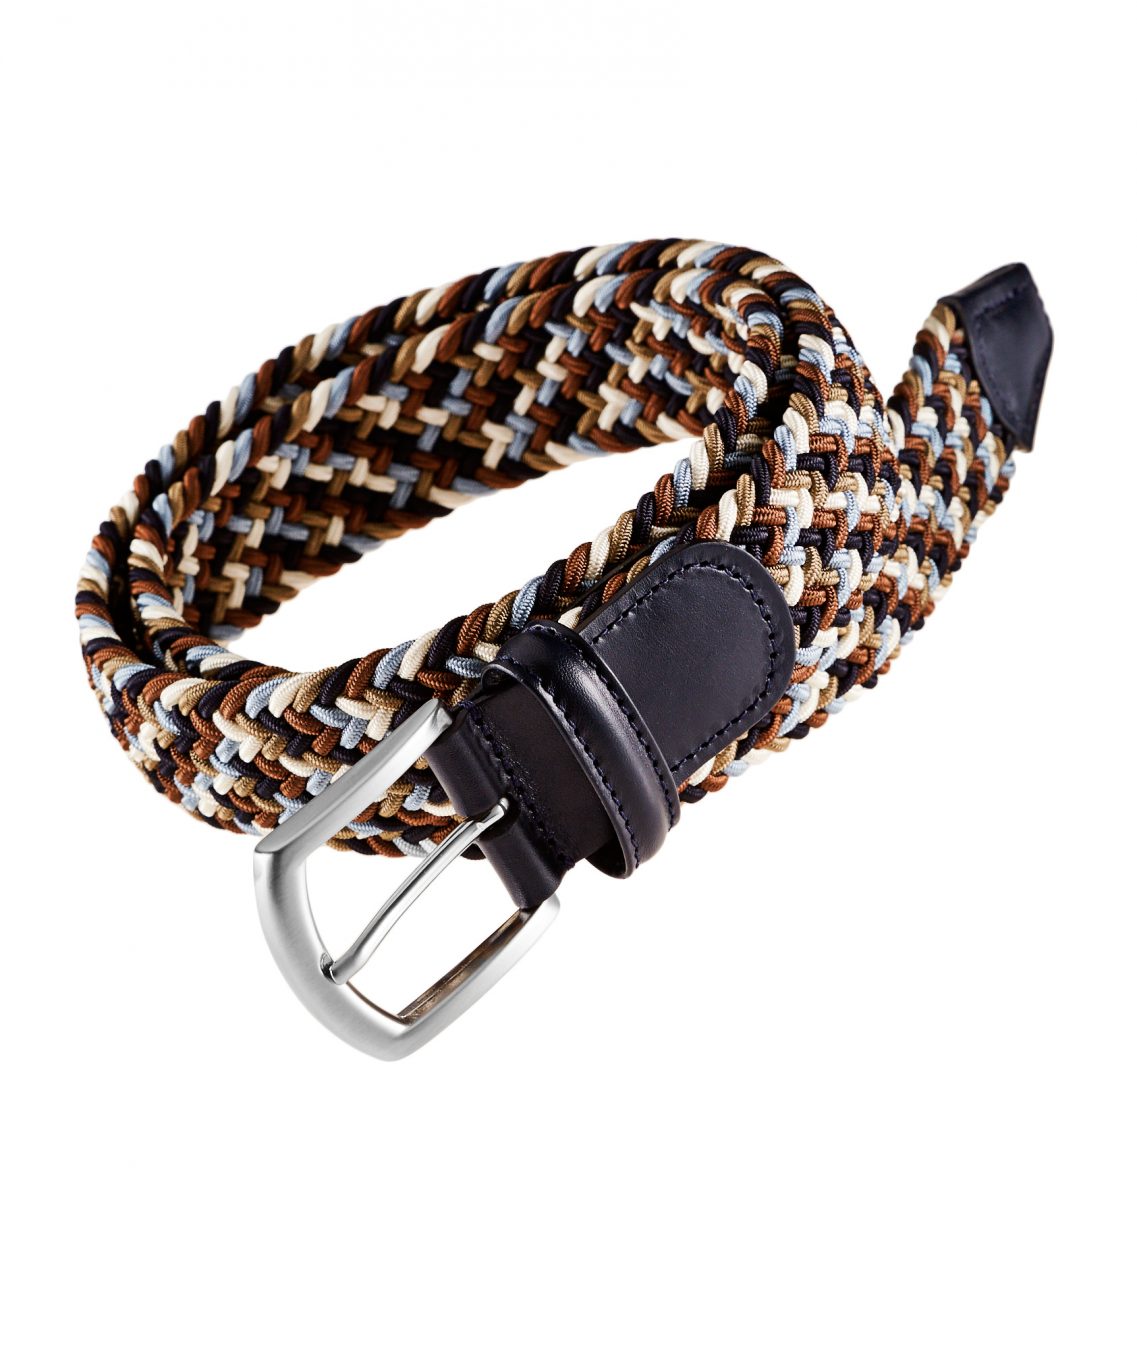 Anderson's Belts Elastic Woven Fabric Belt - Multi